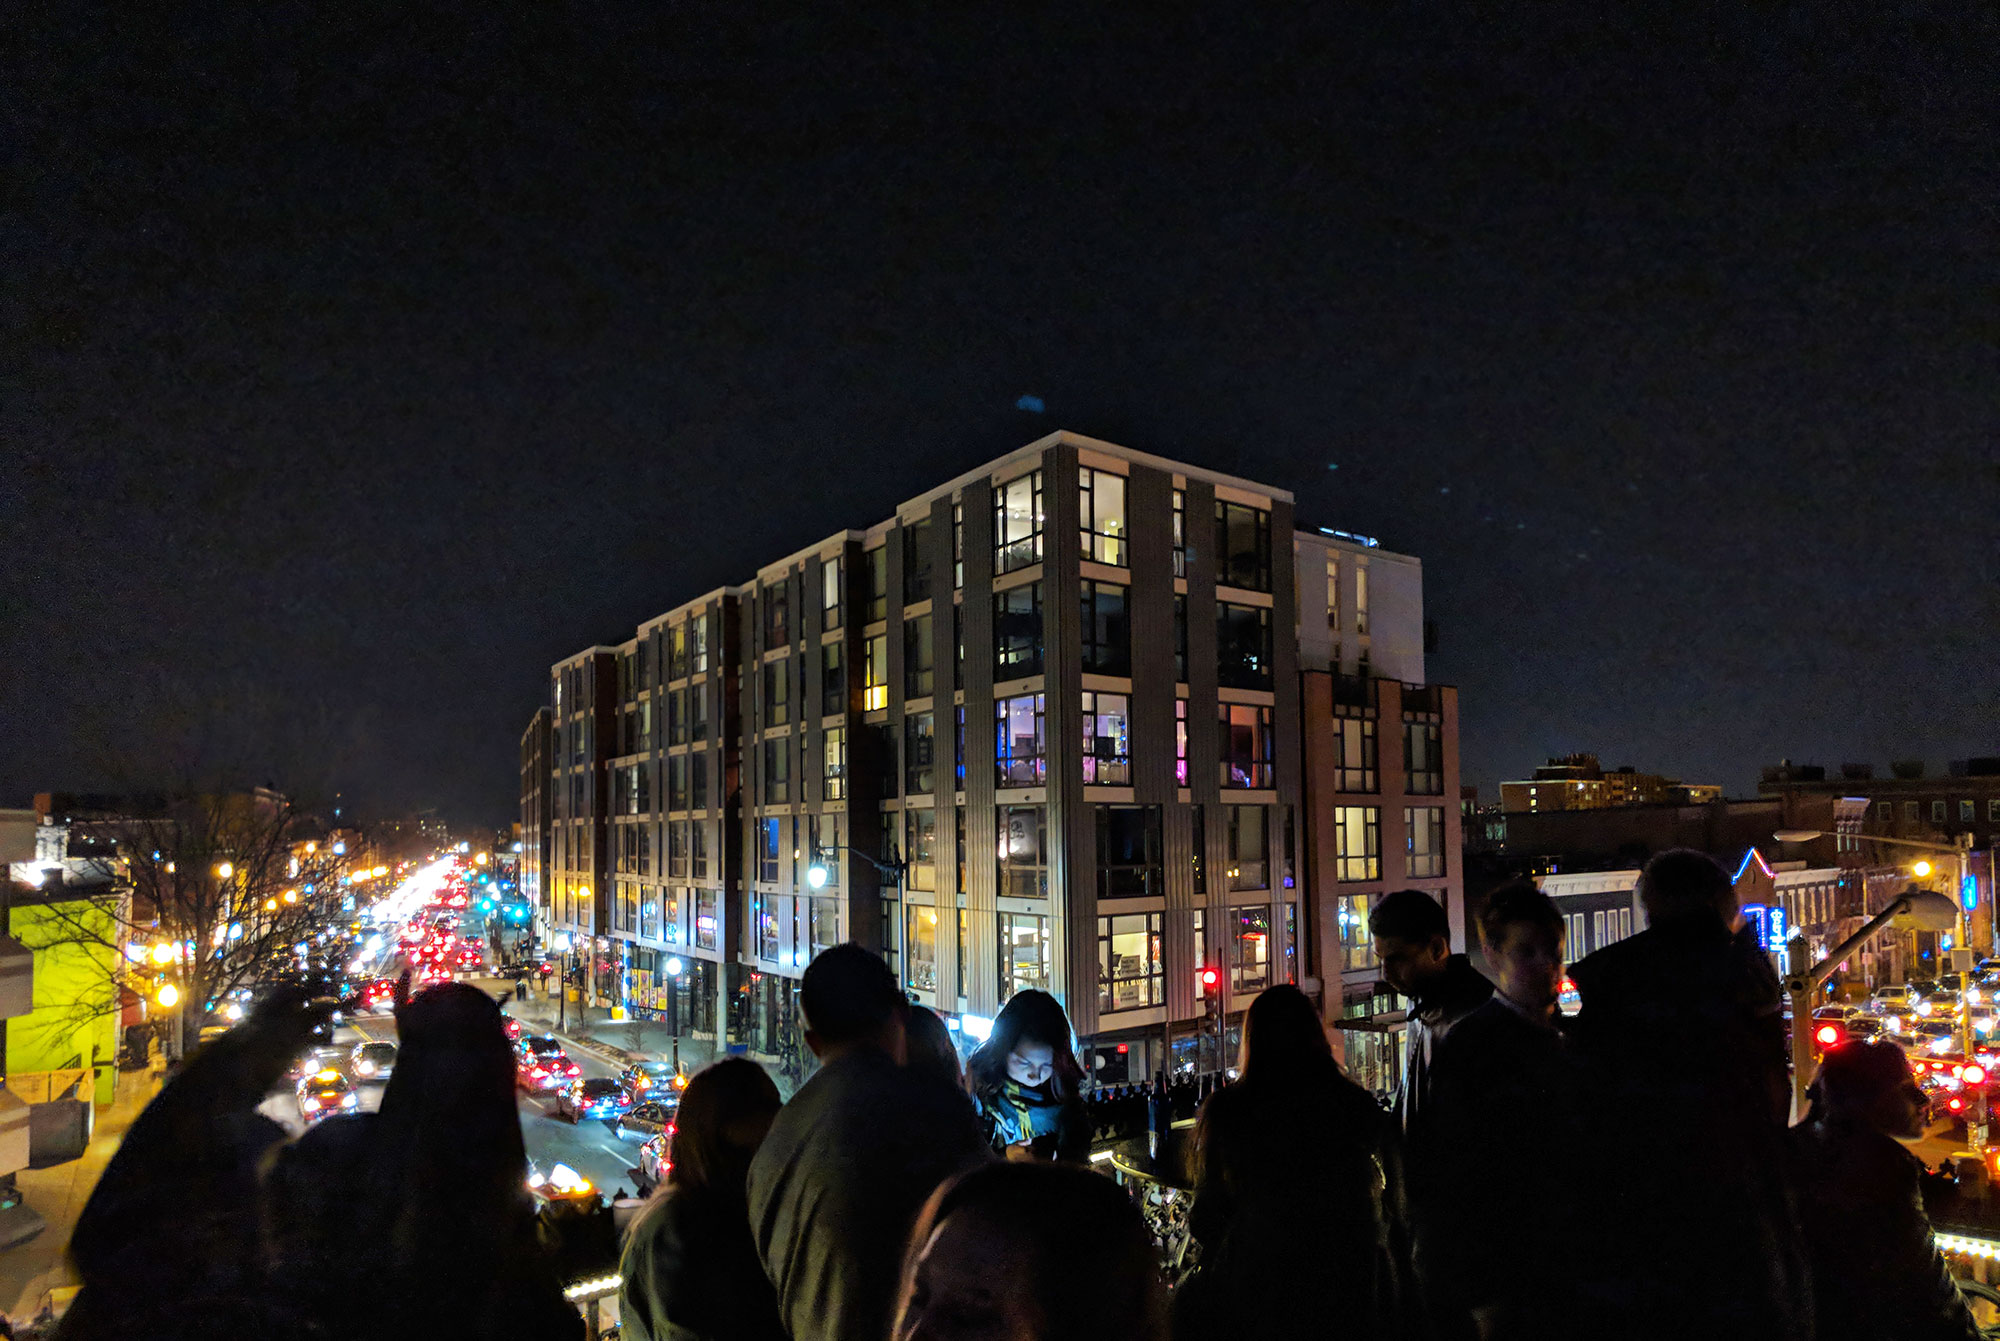 A rooftop evening in Washington D.C.'s U Street neighborhood.